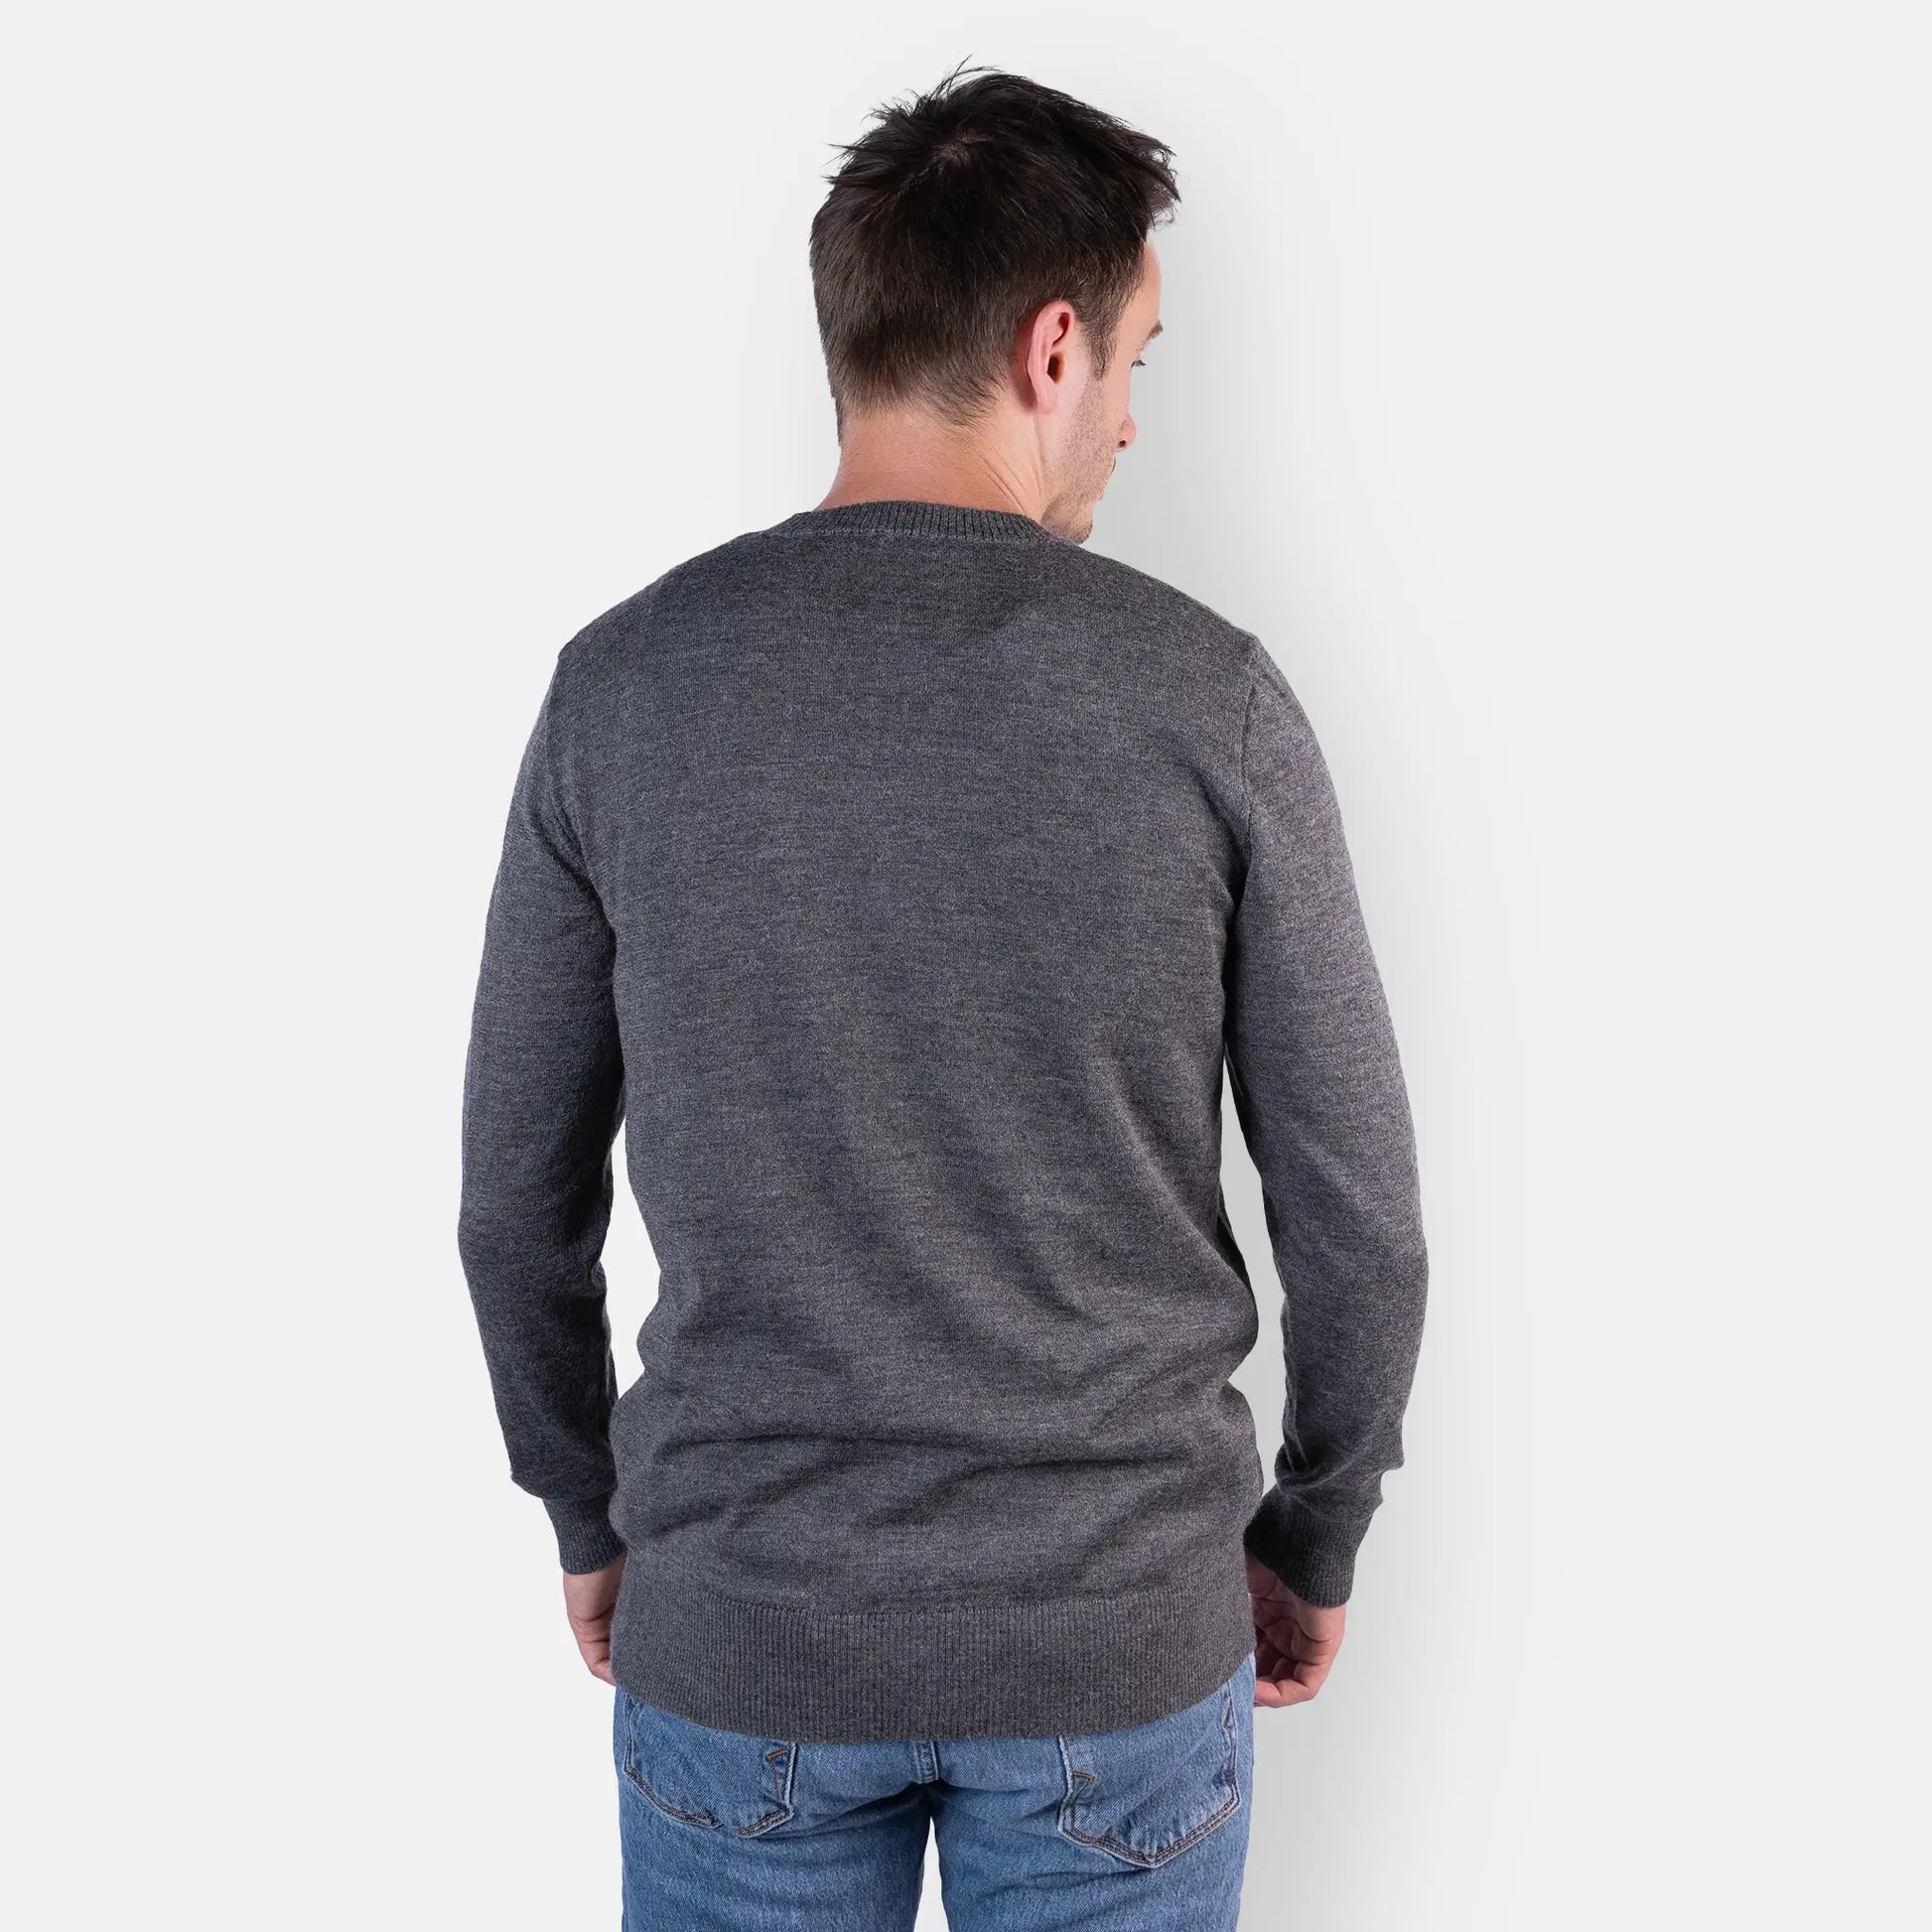 mens alpaca wool sweater fast drying color gray